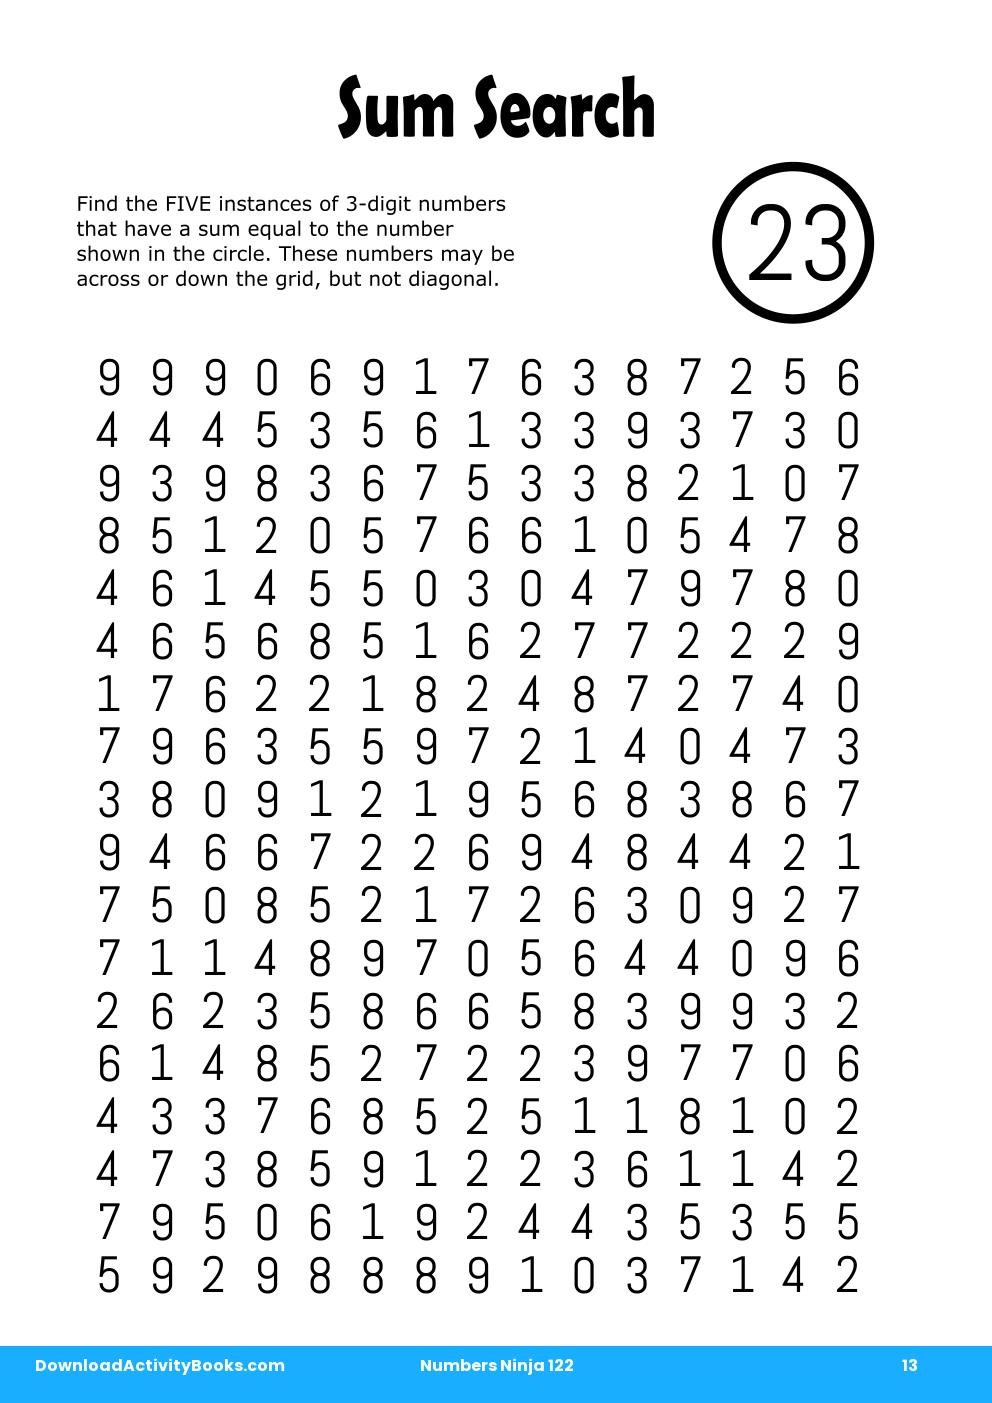 Sum Search in Numbers Ninja 122